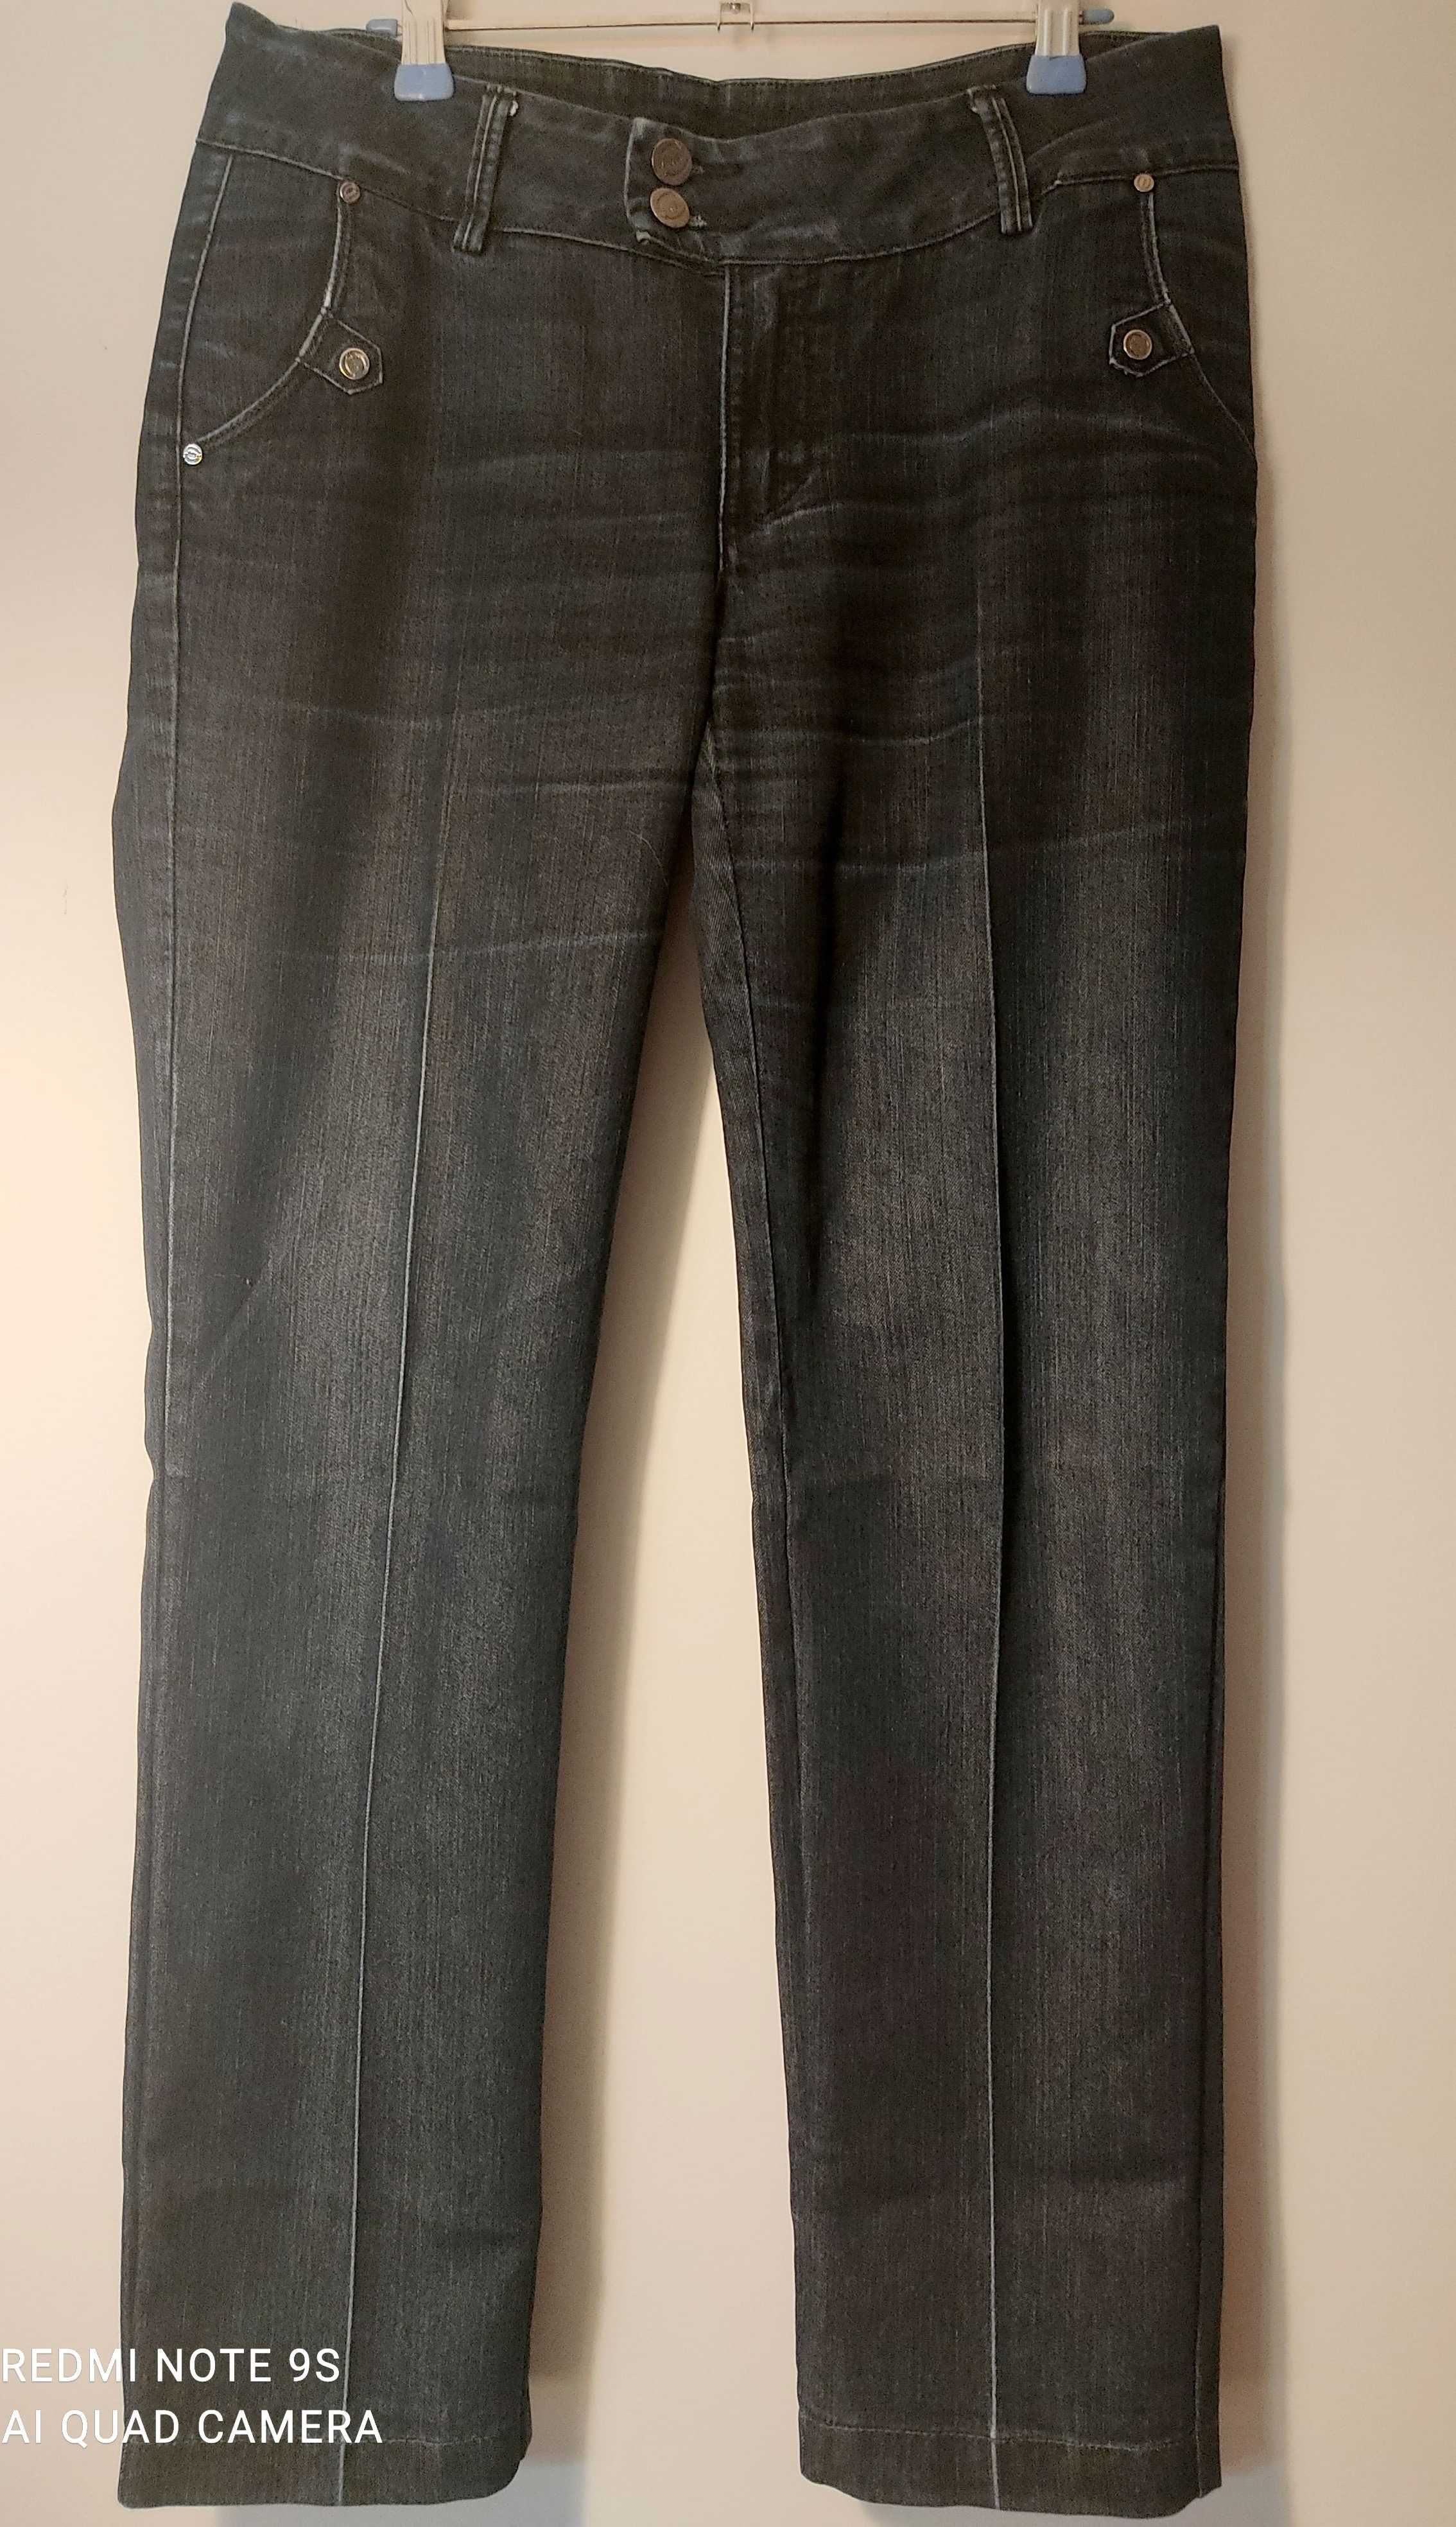 czarne jeansy proste z kantkami W30 L33